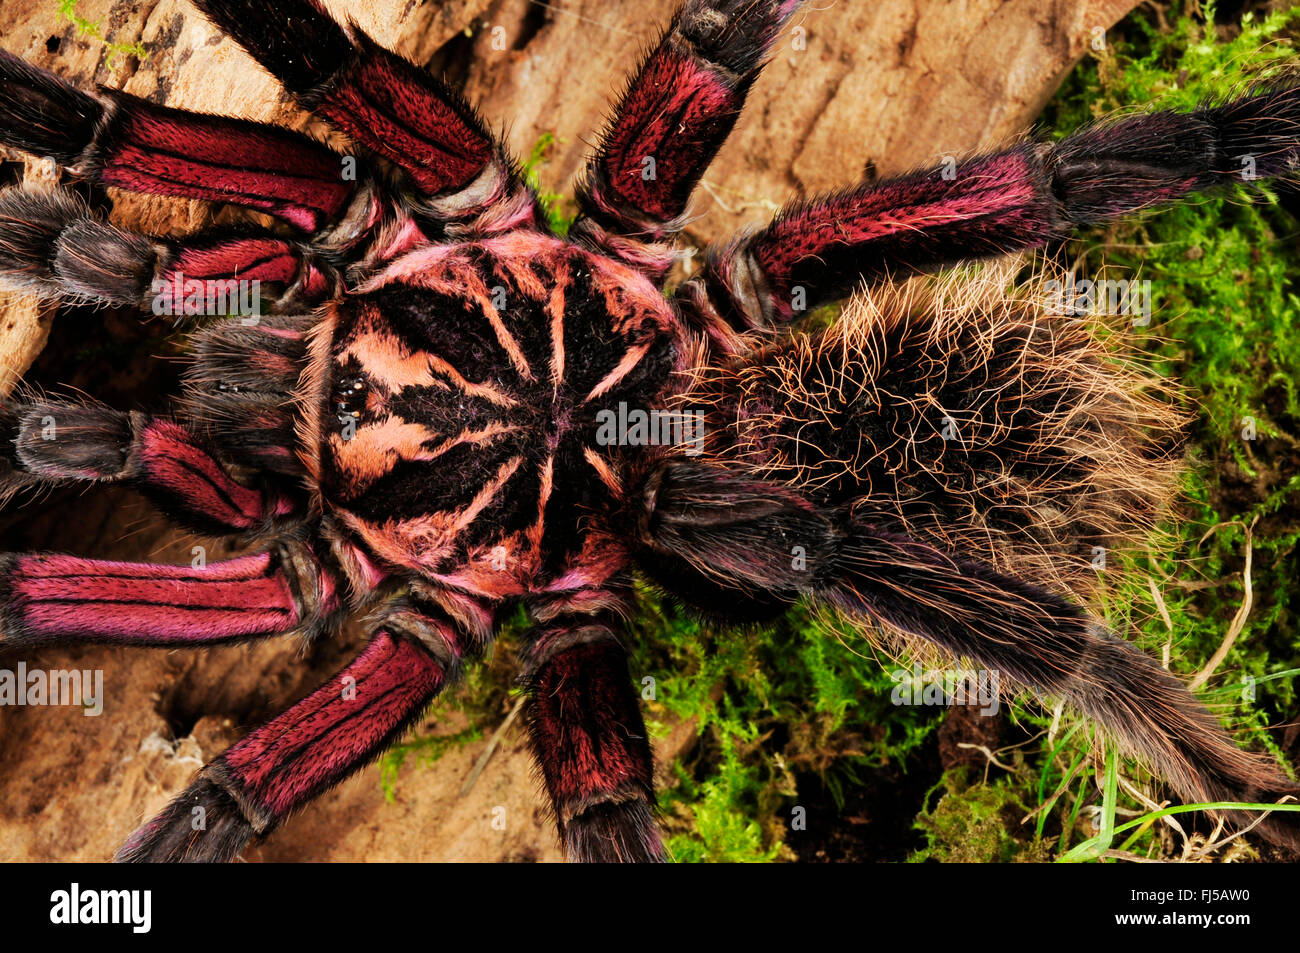 Purple tarantula hi-res stock photography and images - Alamy